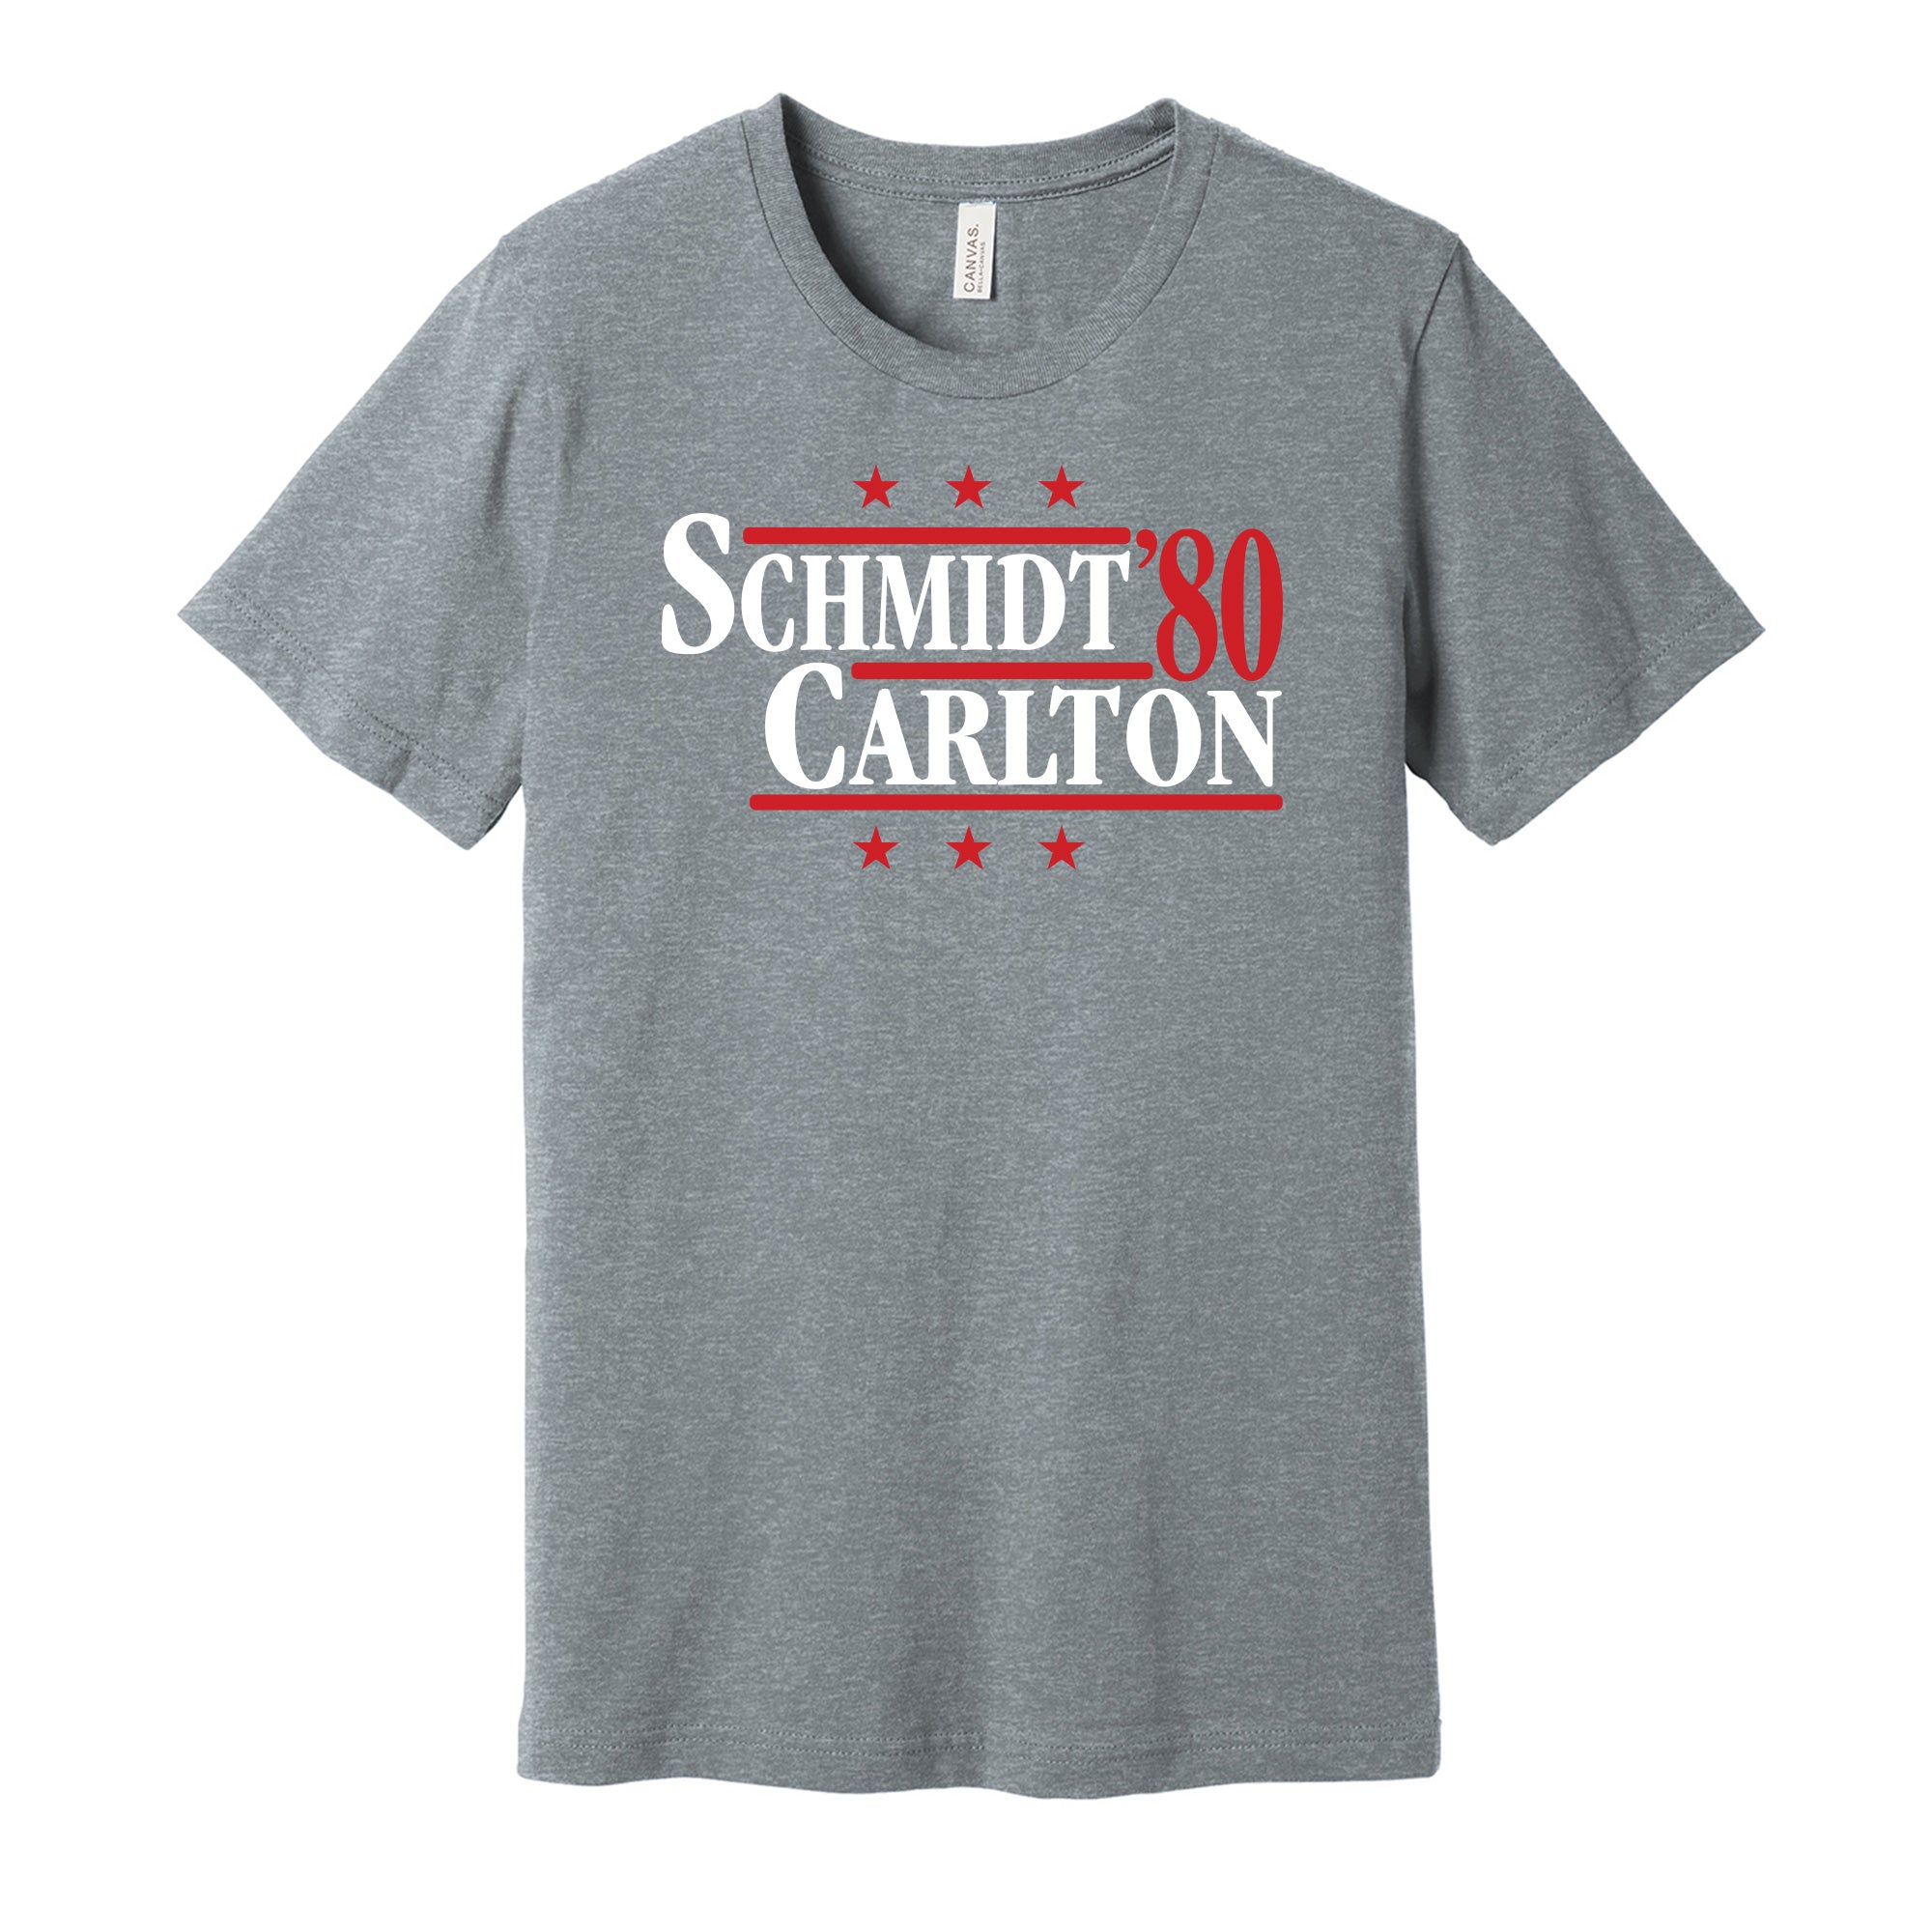 Schmidt & Carlton '80 - Philadelphia Baseball Legends Political Campaign Parody T-Shirt - Hyper Than Hype Shirts XS / Grey Shirt